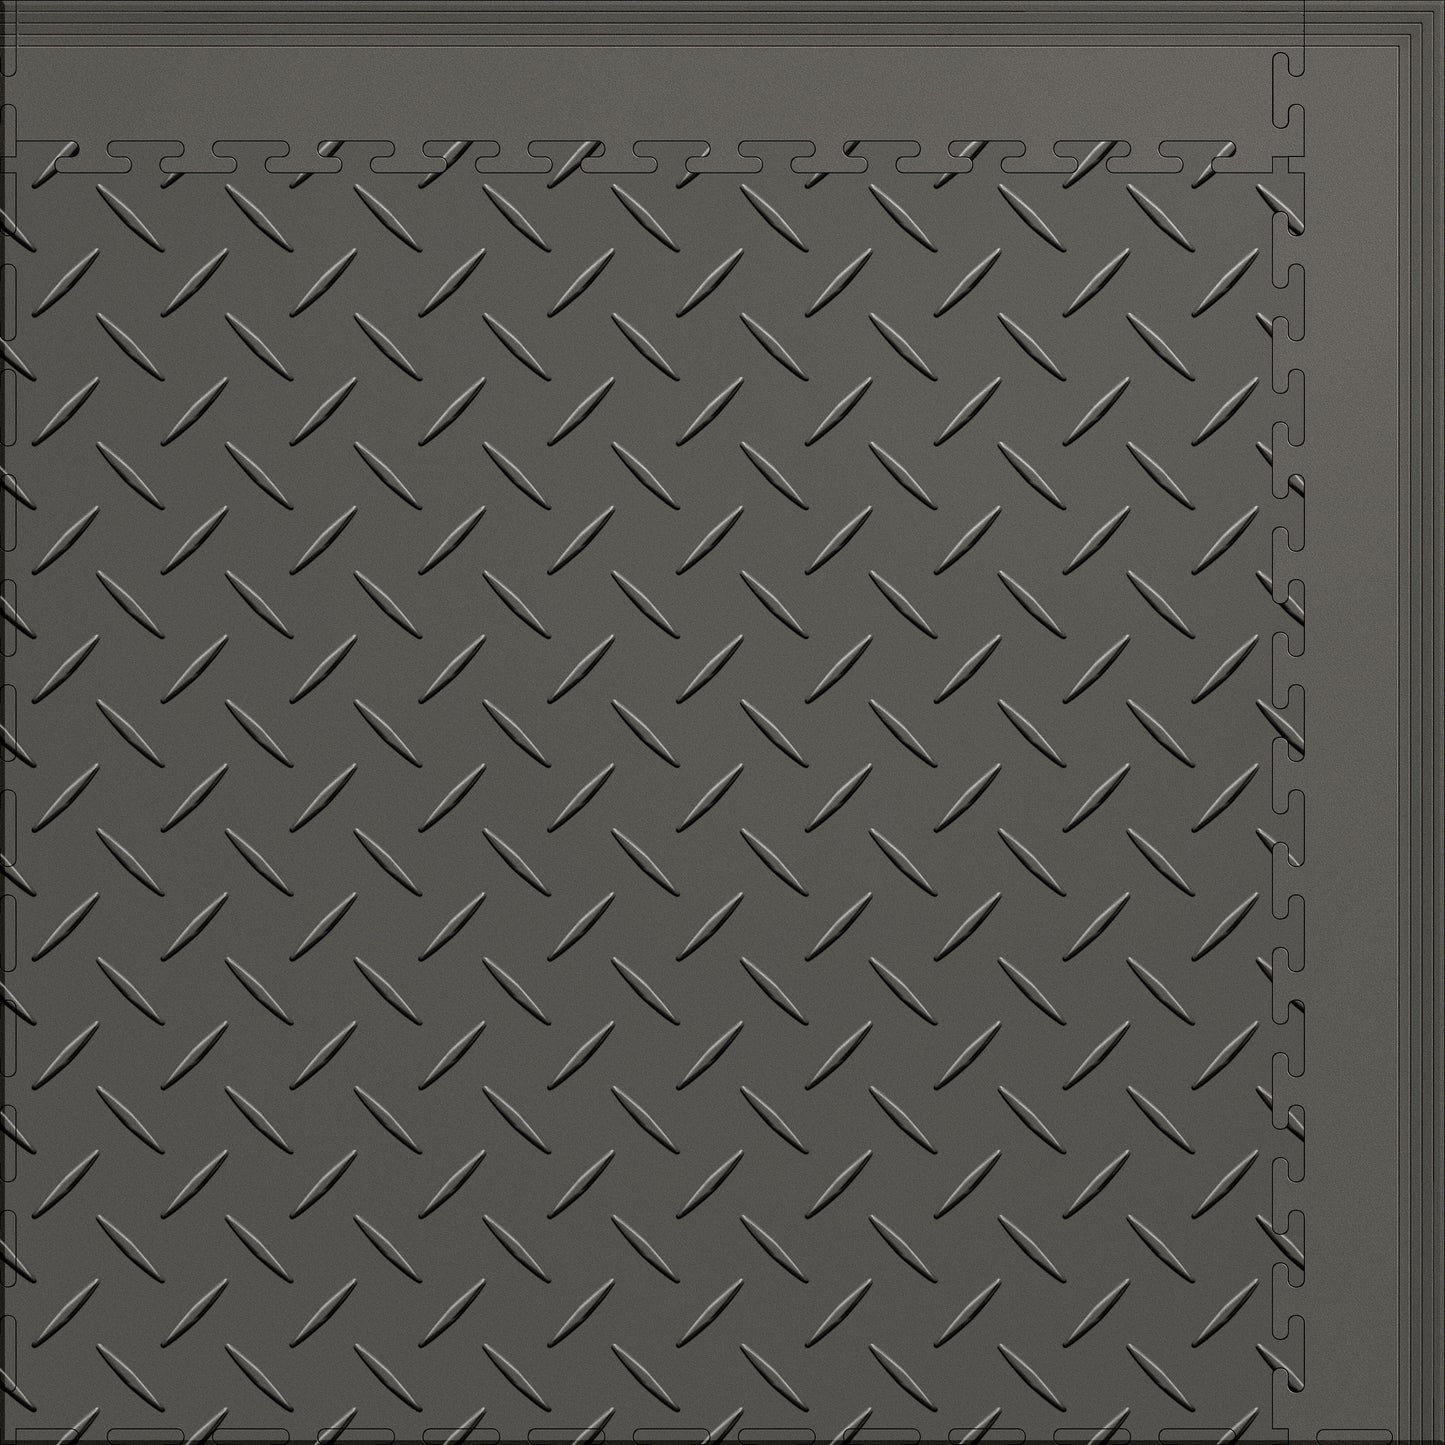 Small Gym & Floor Mat 3x4 (12 Tiles 39.88 sq. ft.)